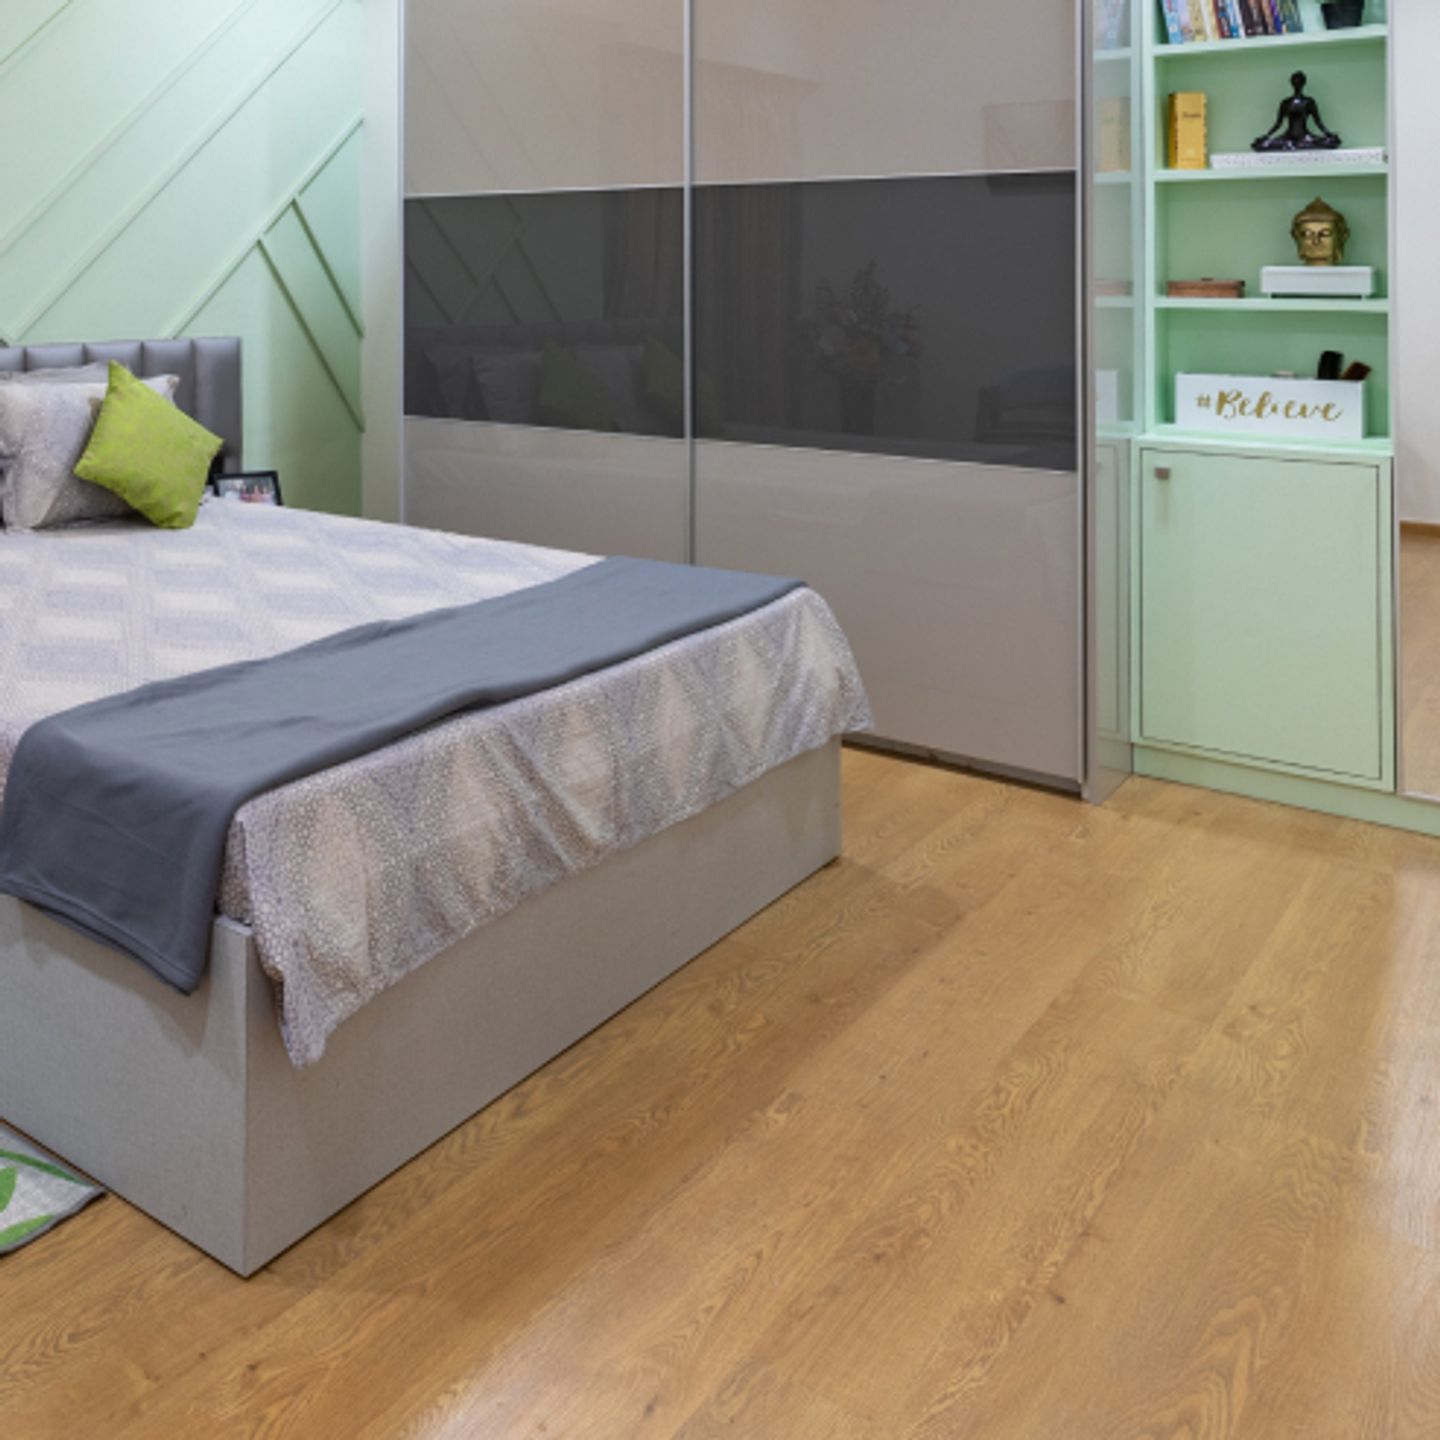 Wooden Flooring For Compact Bedrooms - Livspace